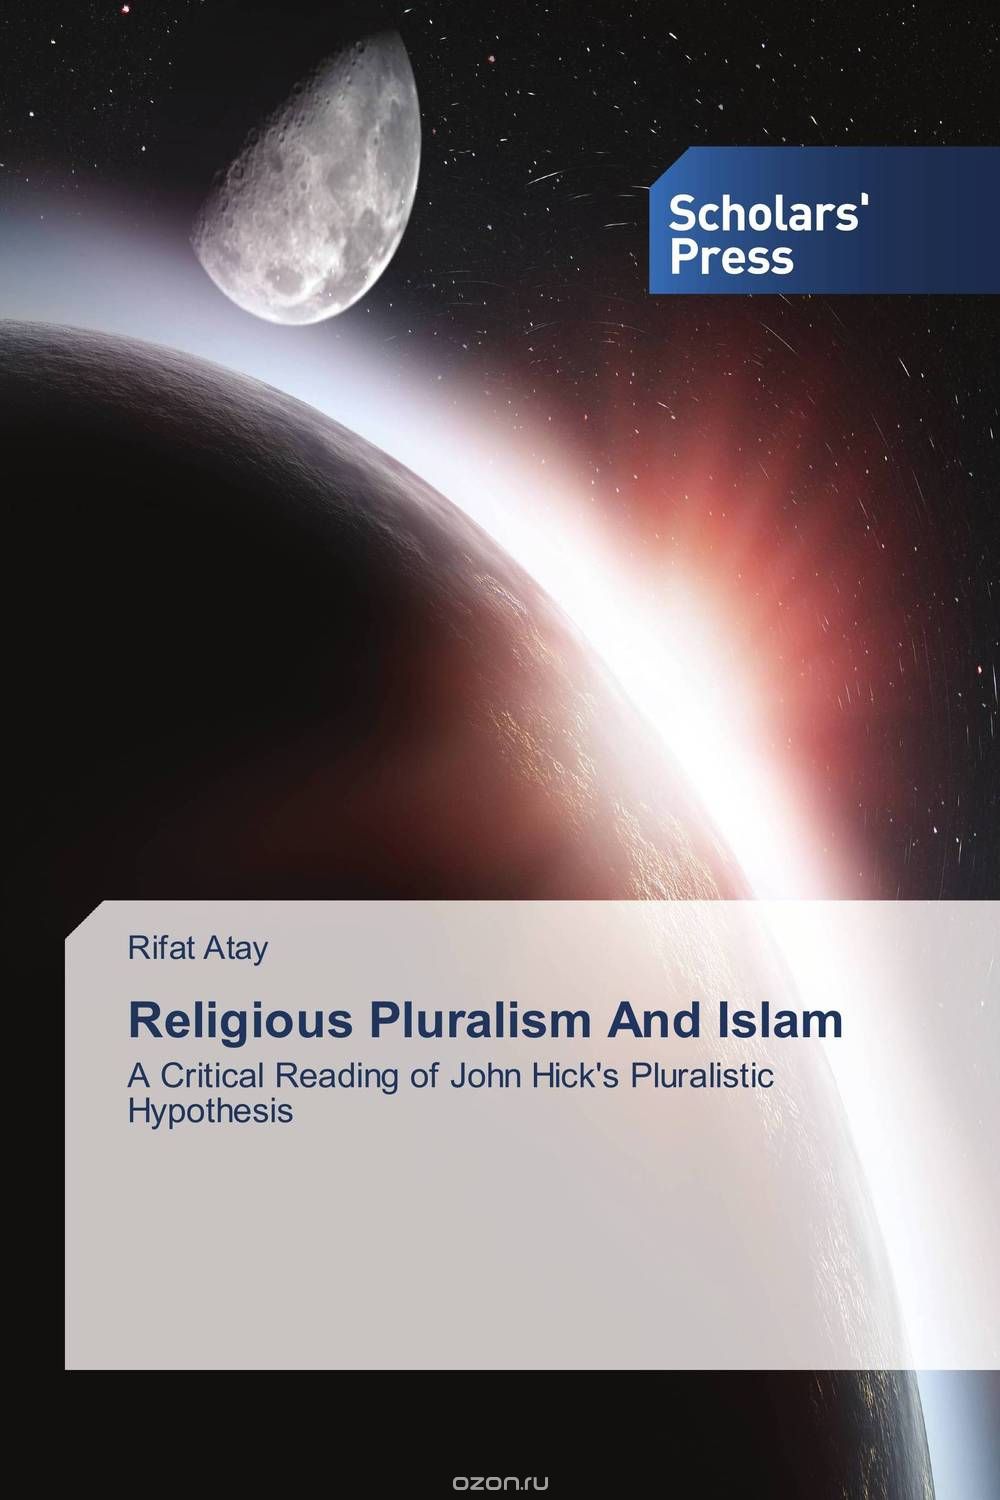 Скачать книгу "Religious Pluralism And Islam"